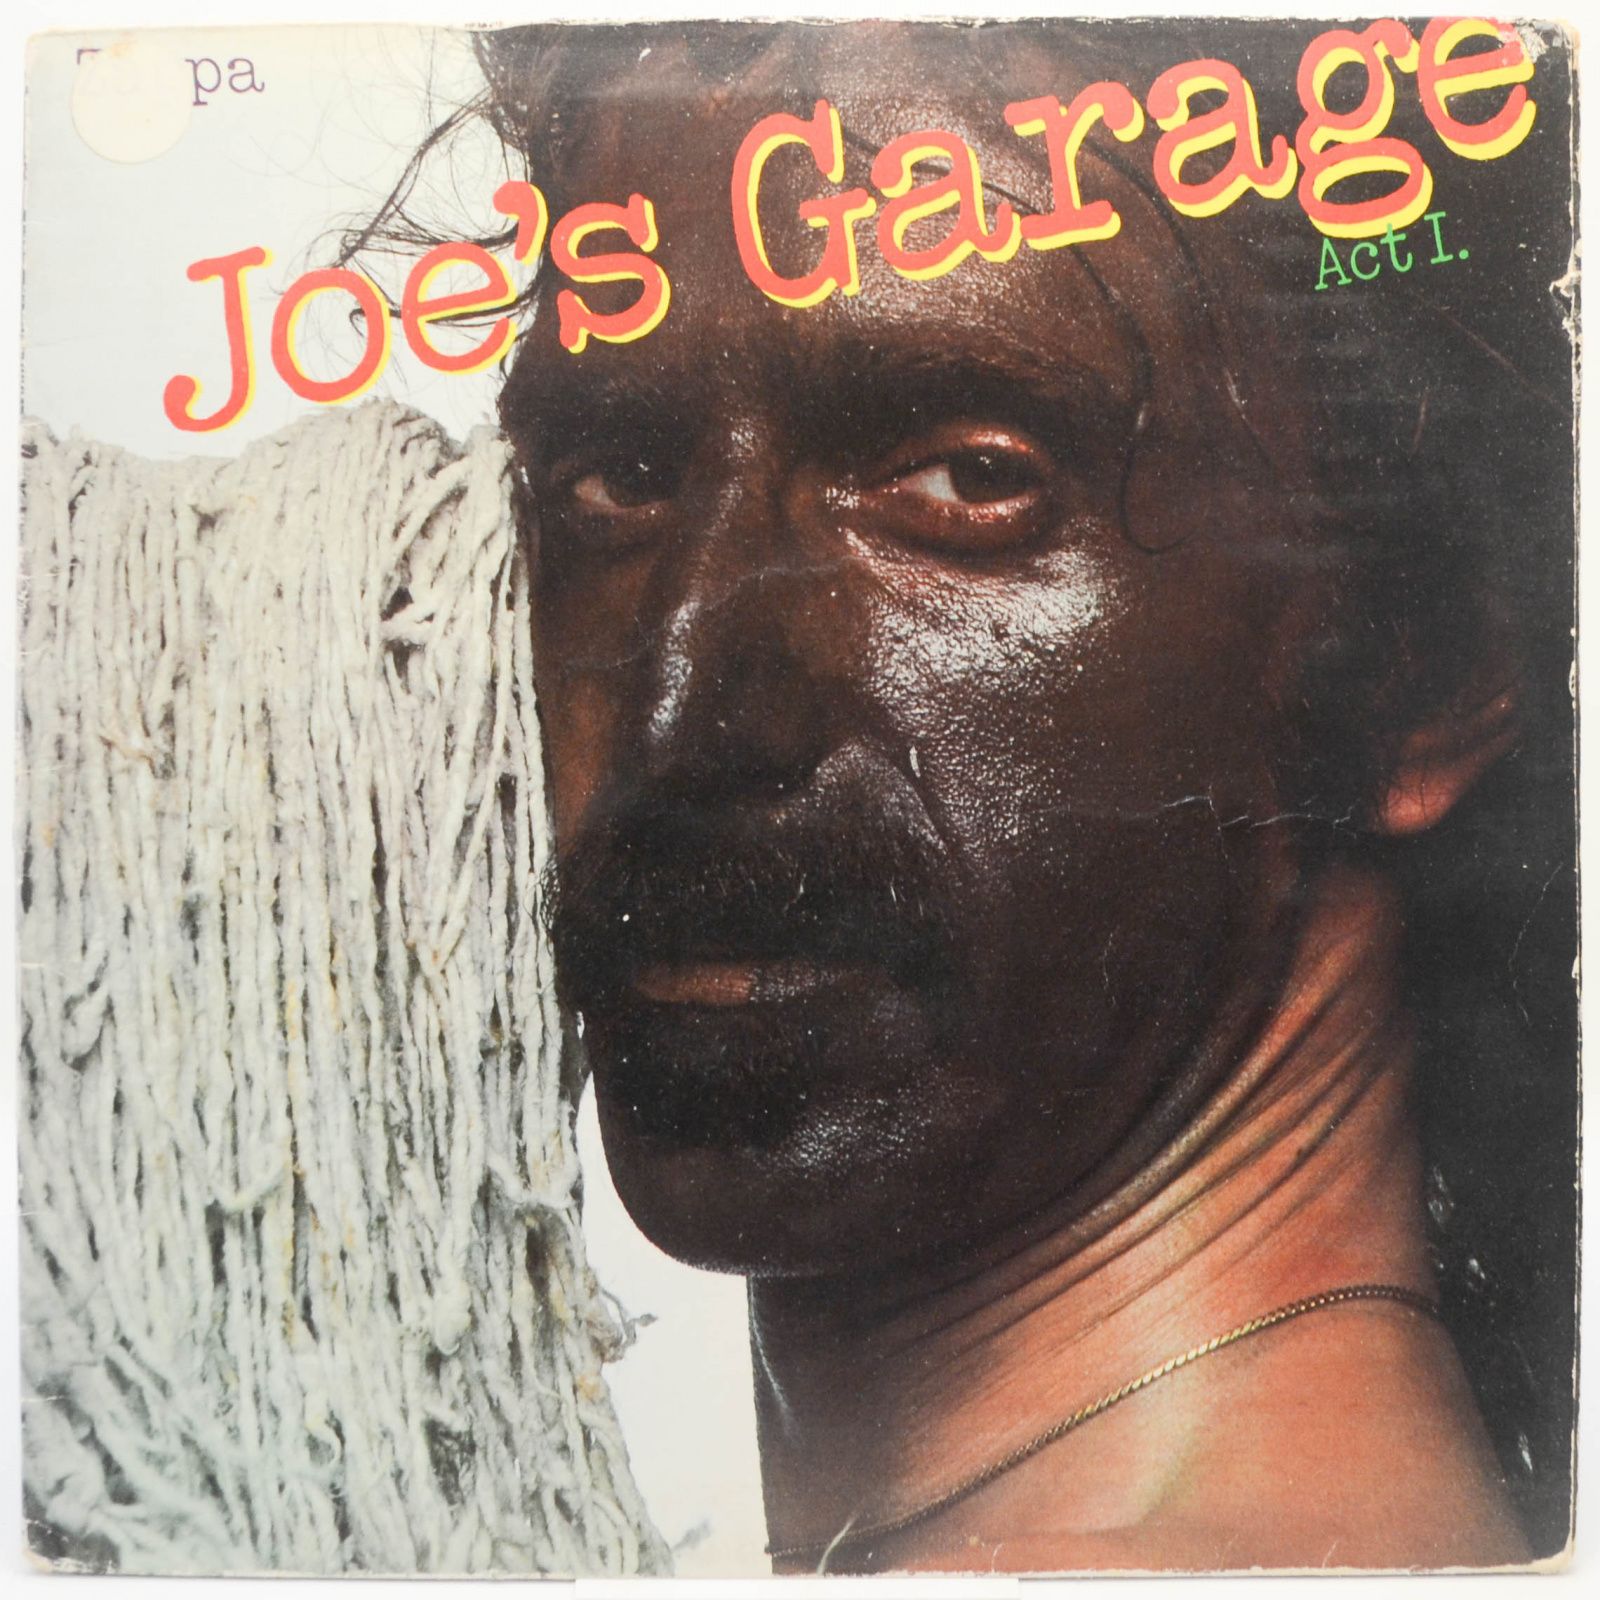 Zappa — Joe's Garage Act I., 1979